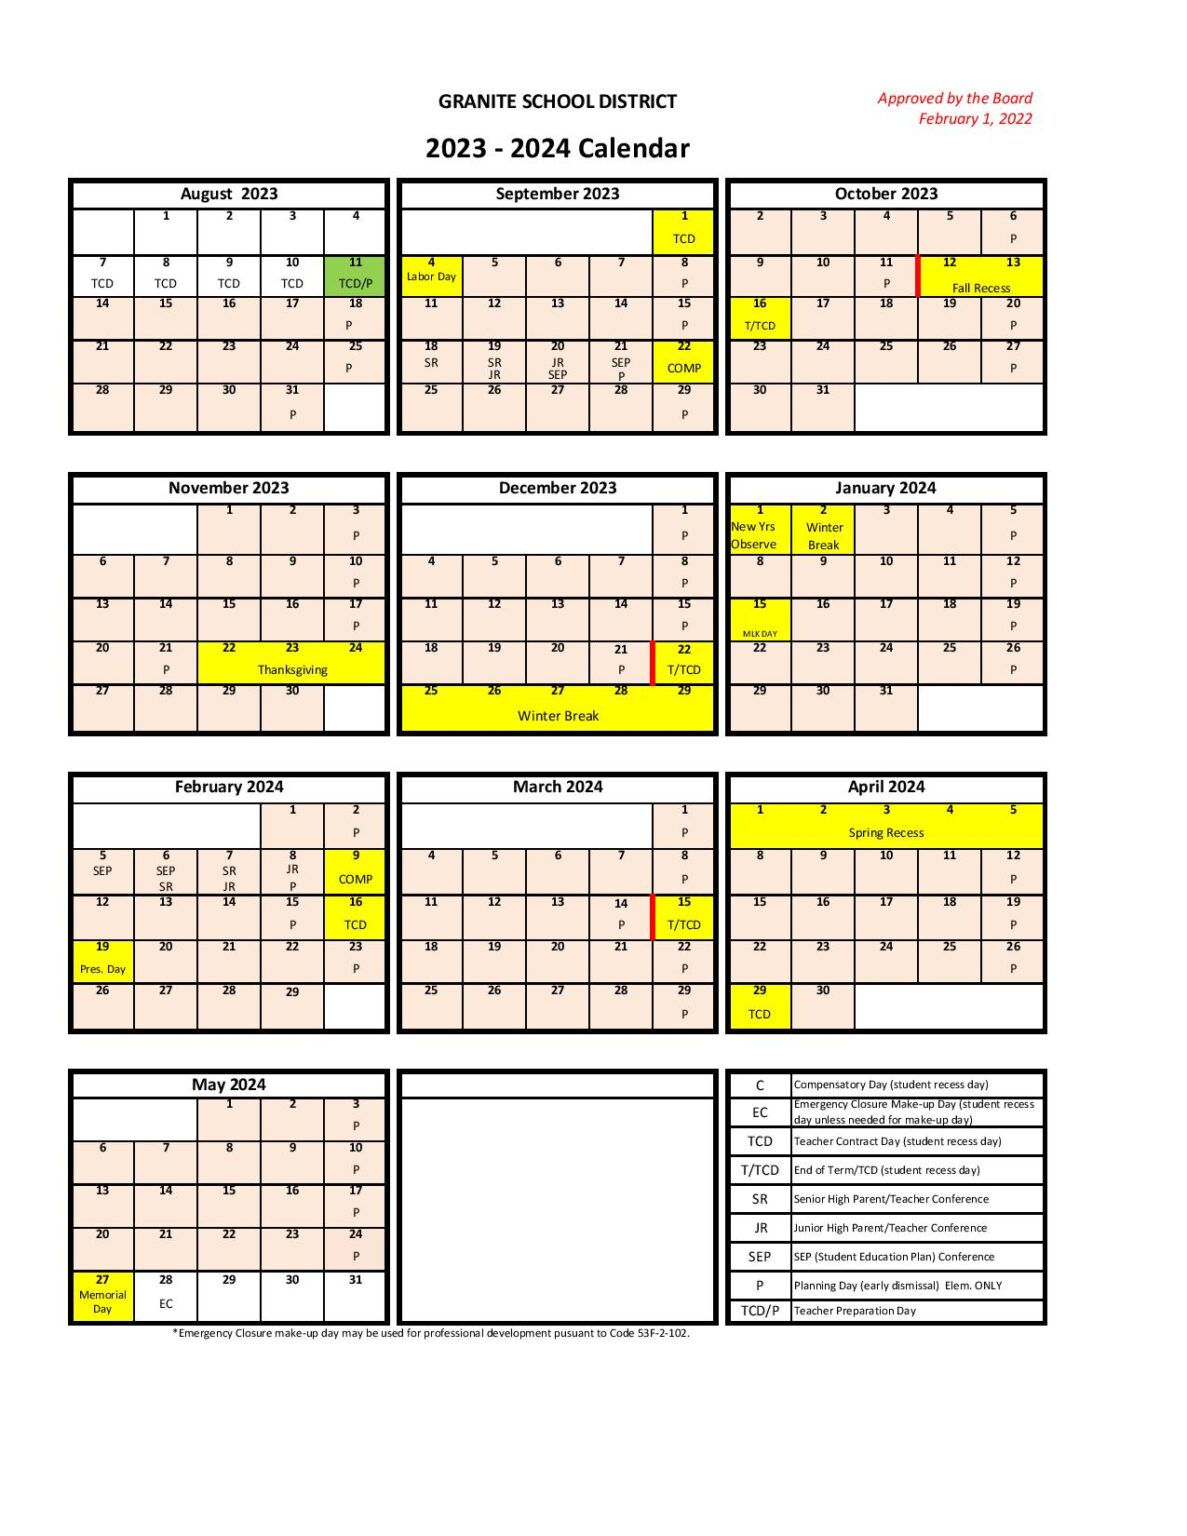 Granite School District Calendar Holidays 2023 2024